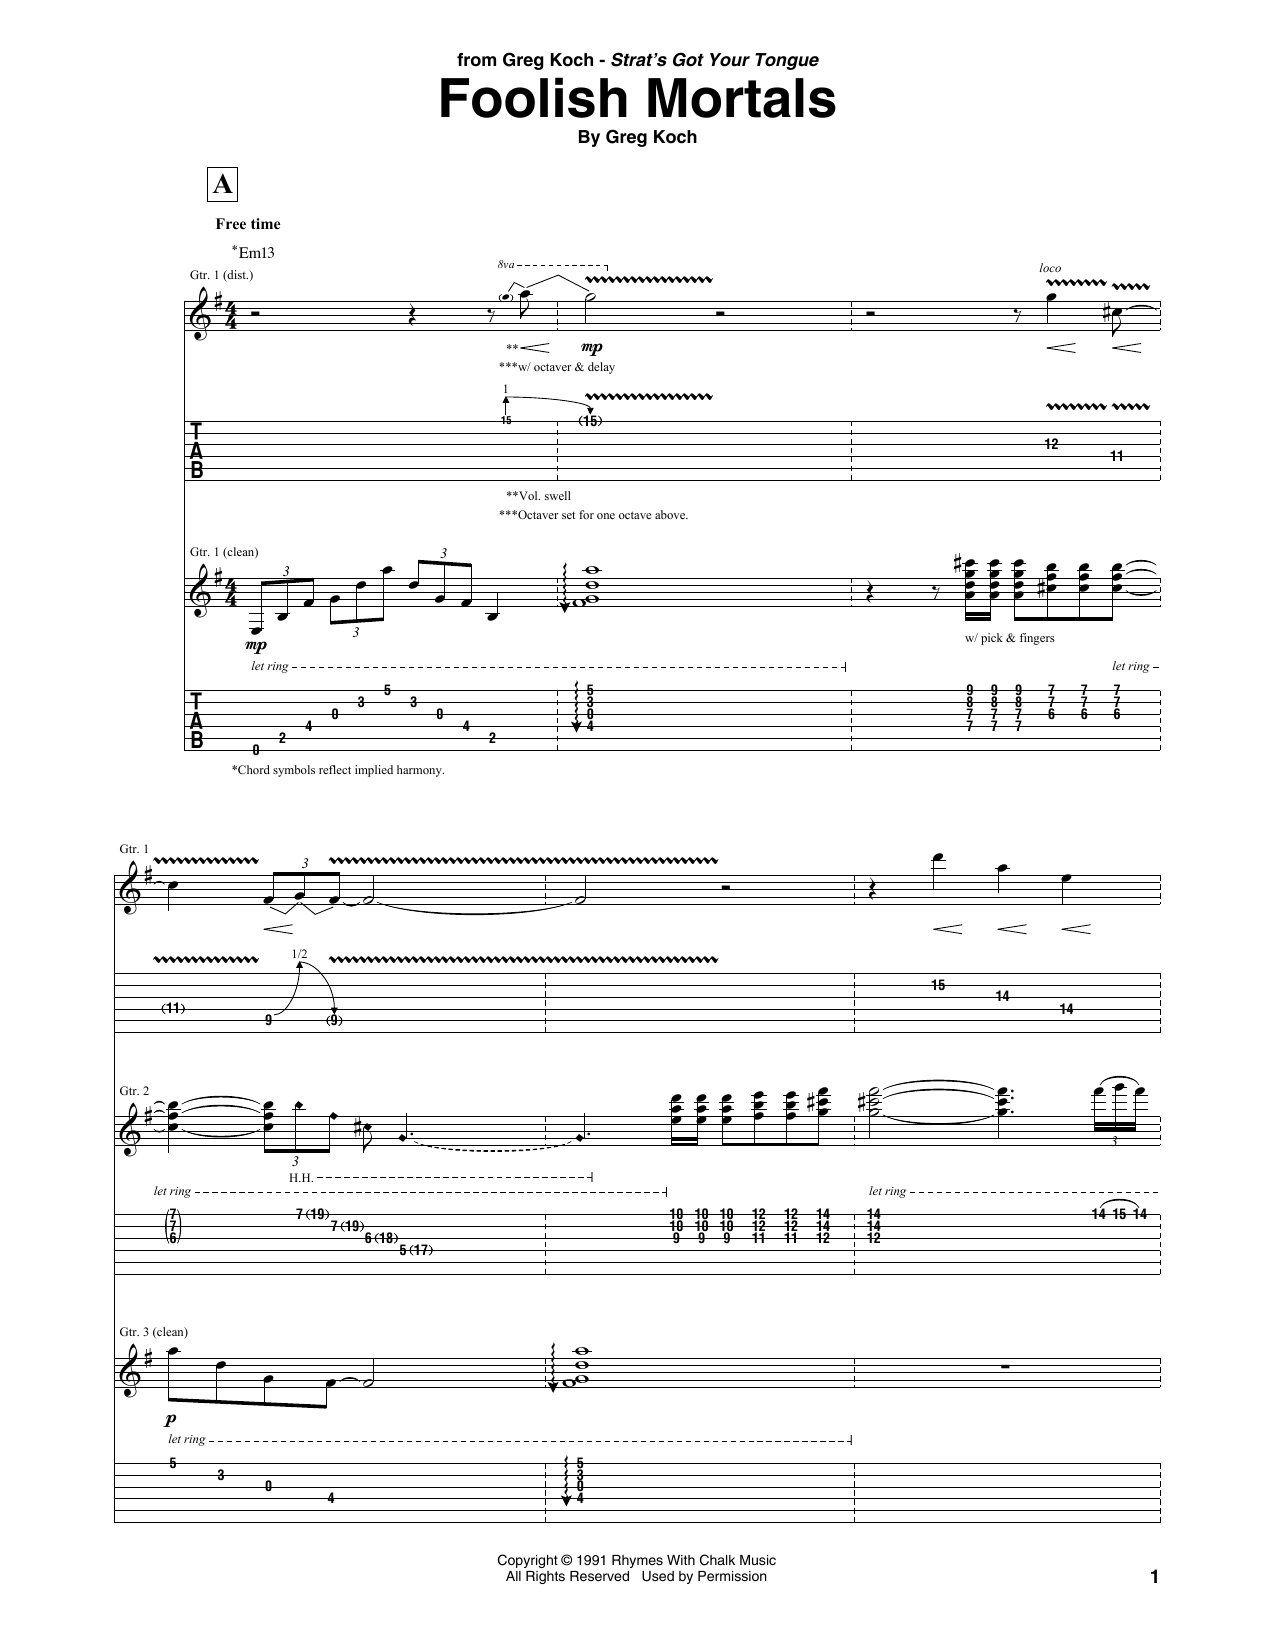 Greg Koch Foolish Mortals Sheet Music Notes & Chords for Guitar Tab - Download or Print PDF